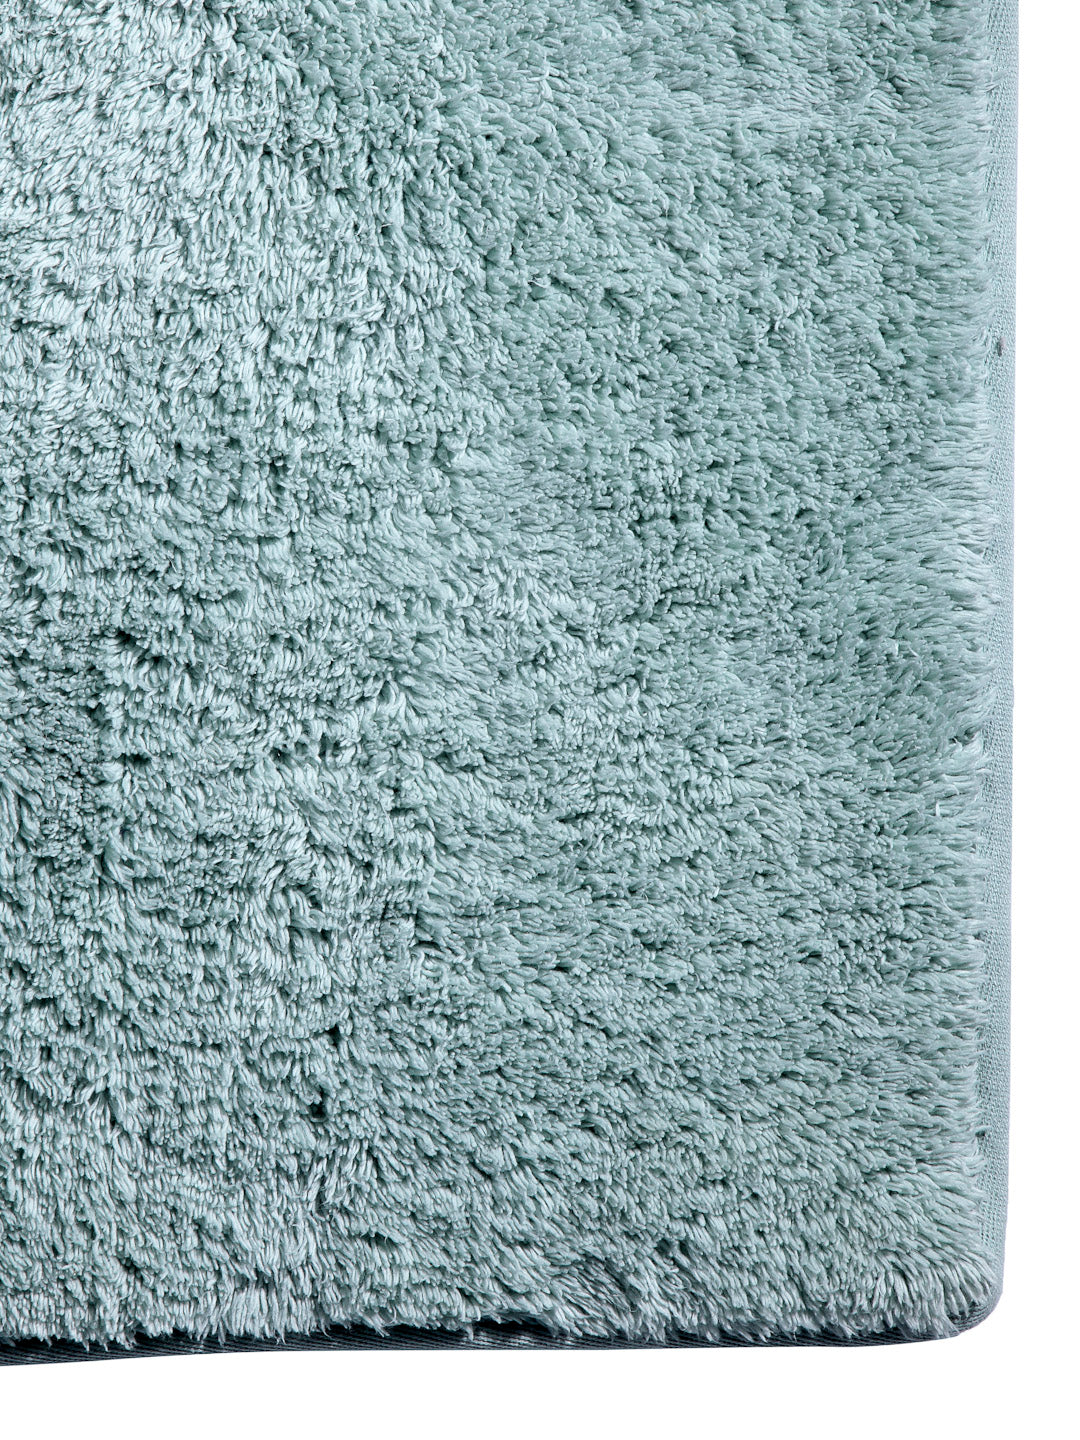 Arrabi Green Solid Polyester Full Size Foam Bath Mat (85 X 50 cm)